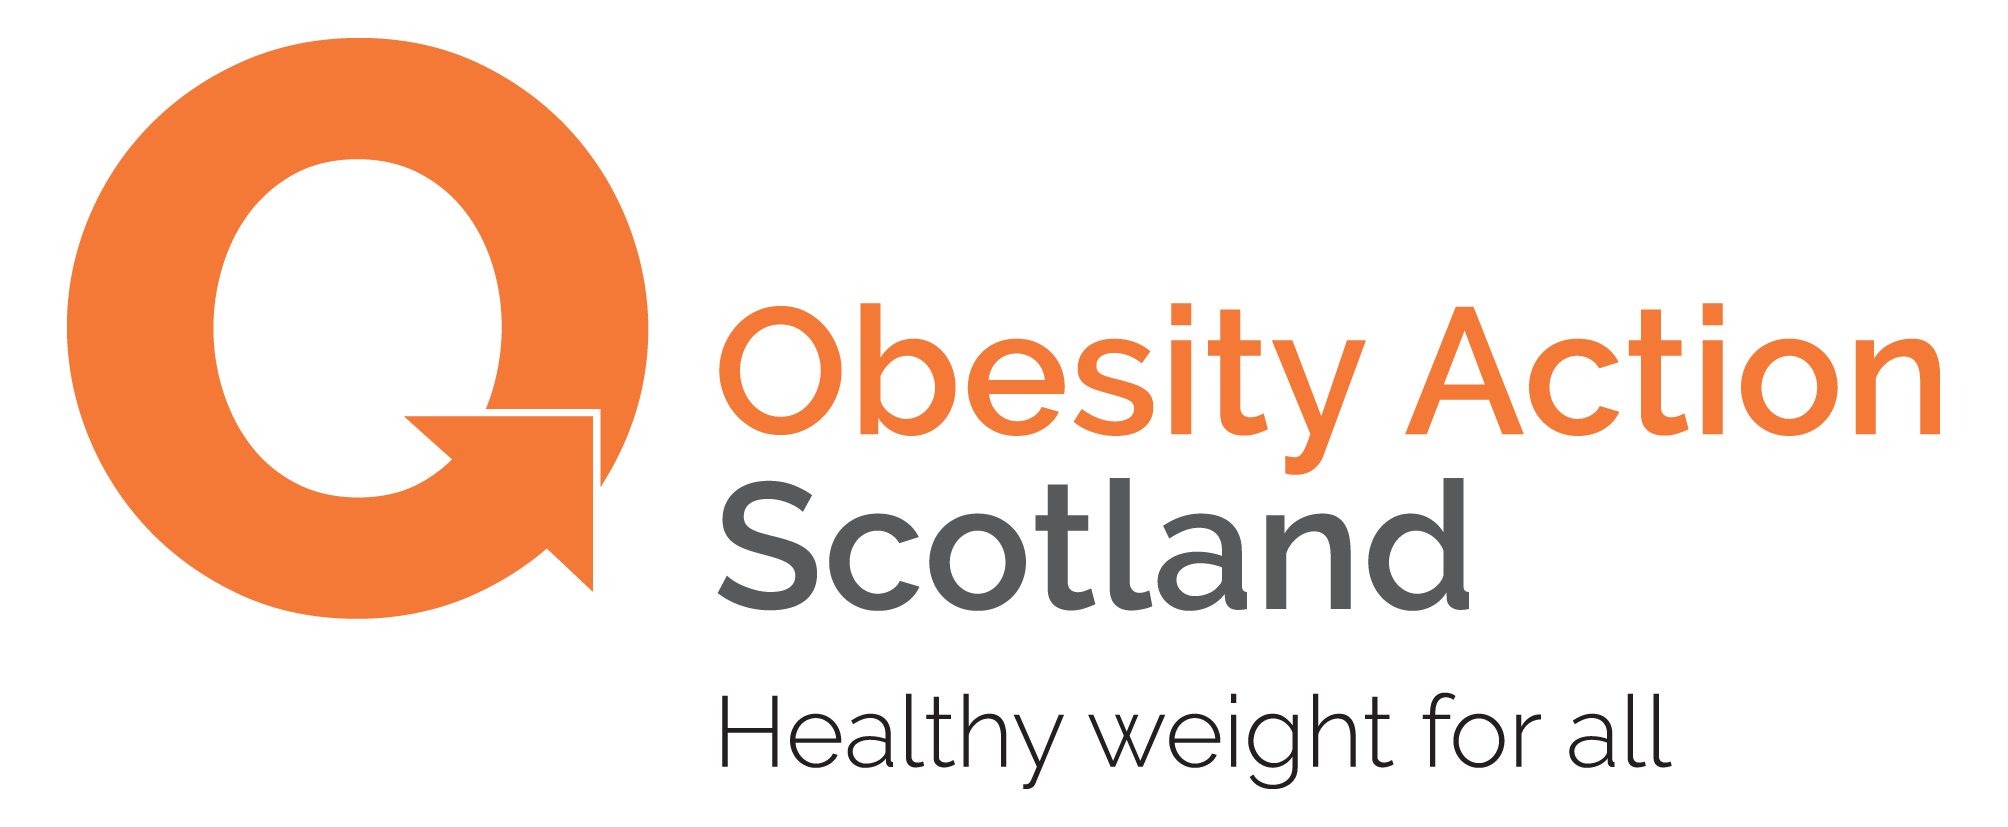 Obesity Action Scotland logo